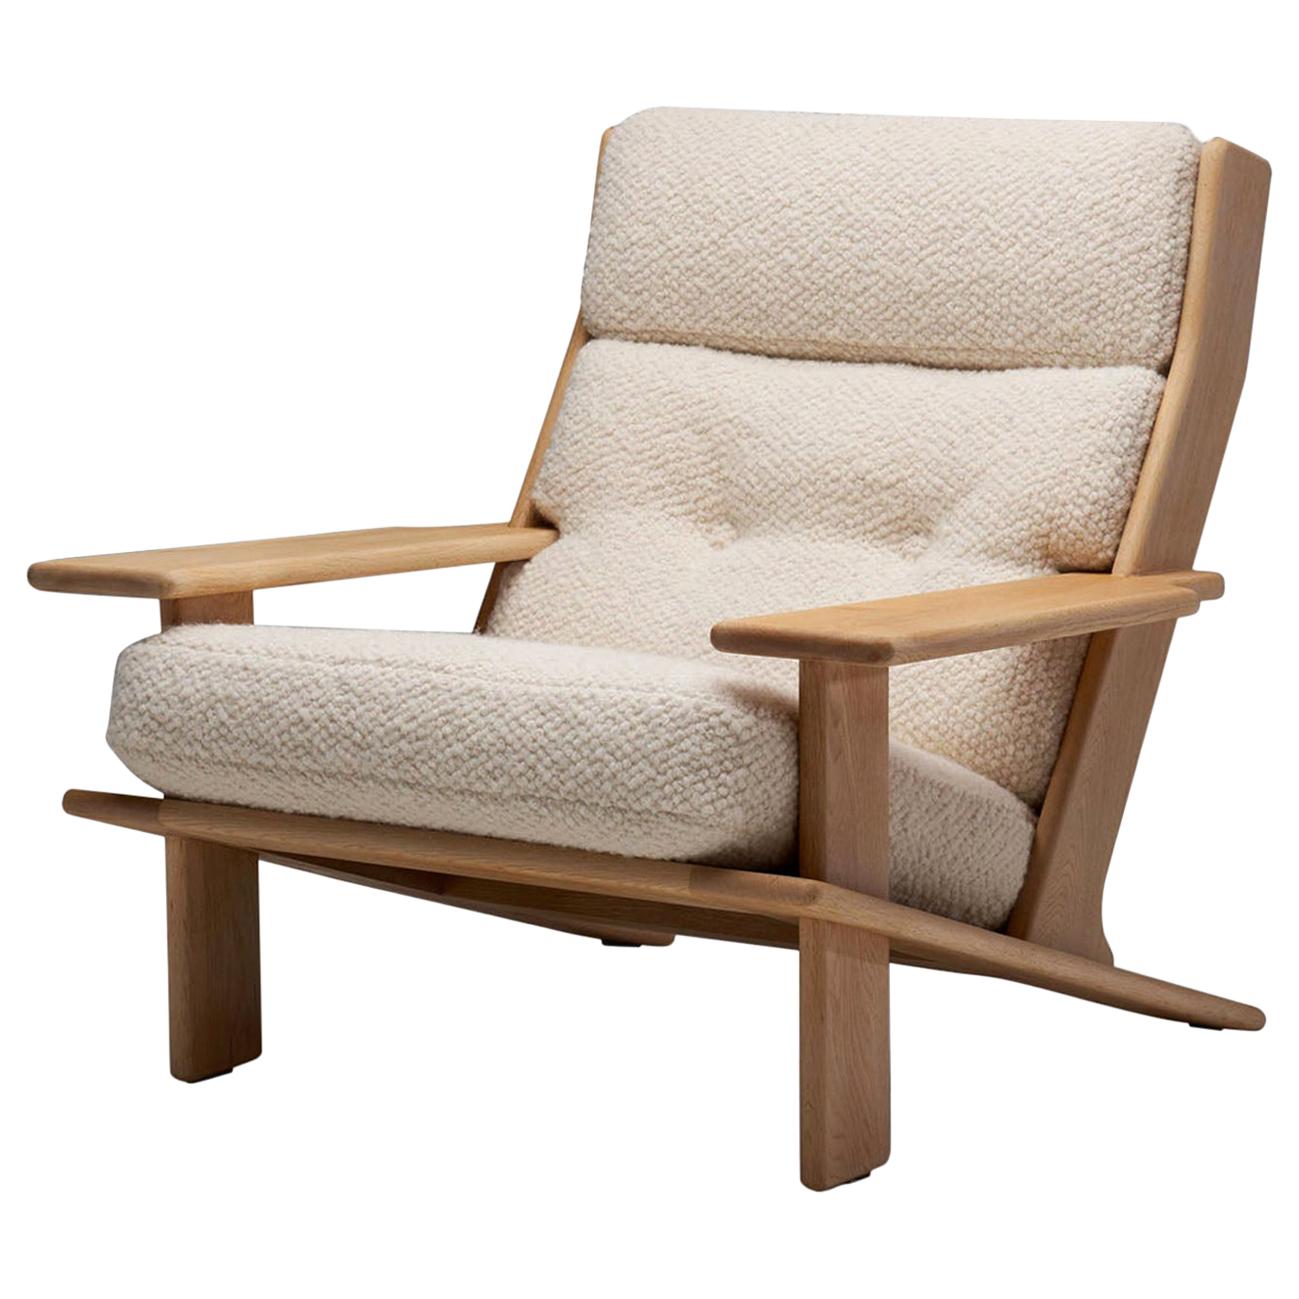 “Pele” Lounge Chair by Esko Pajamies for Lepokalusto, Finland, 1970s